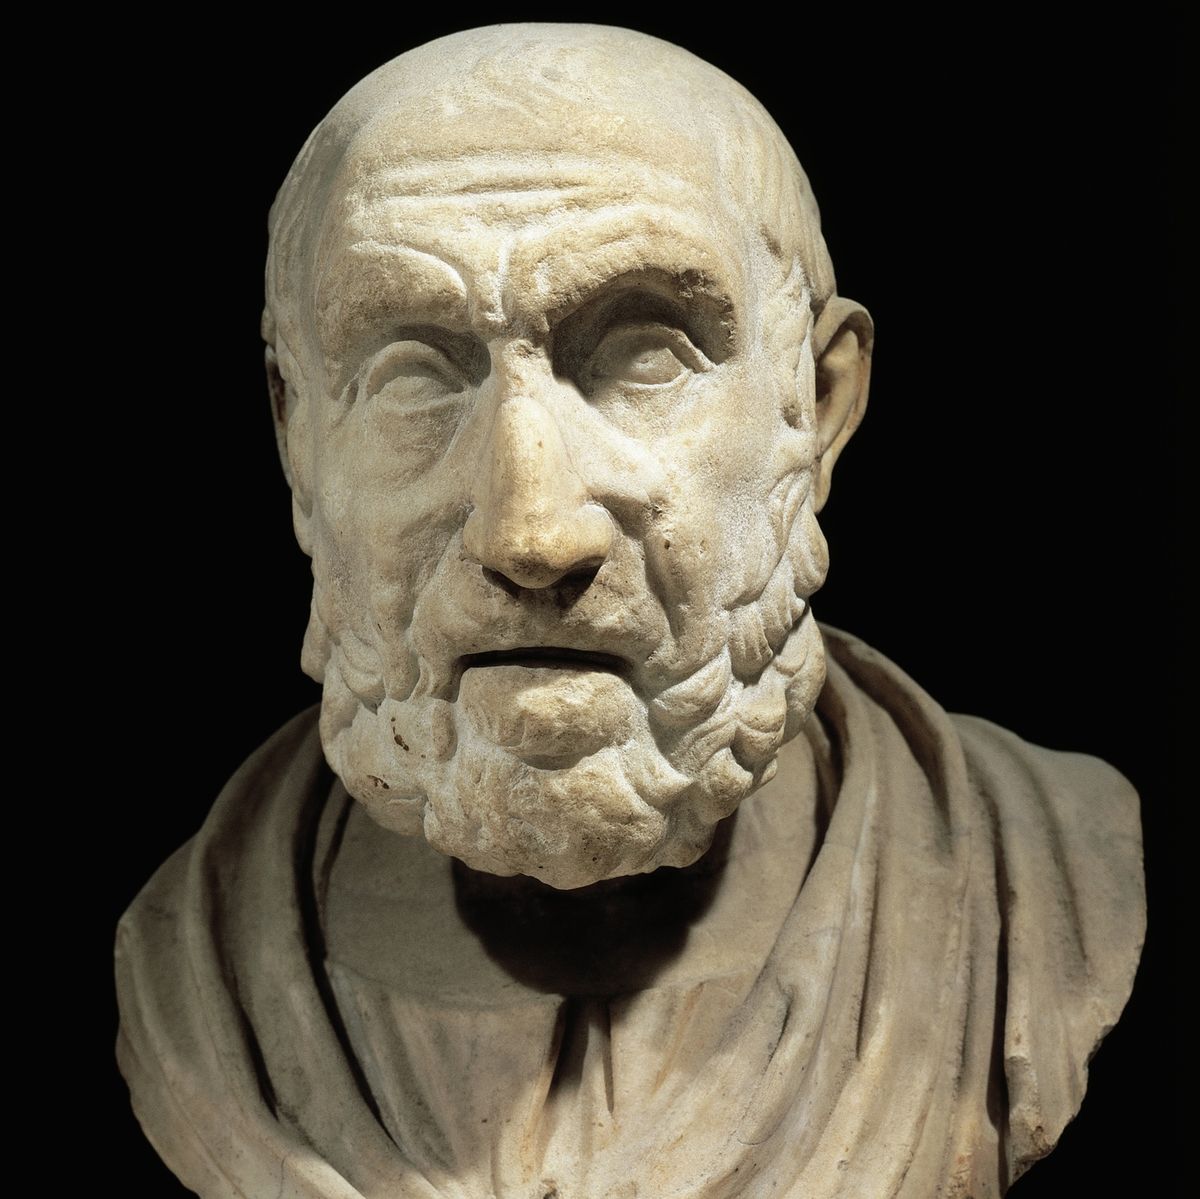 Hippocrates photo, via Getty Images